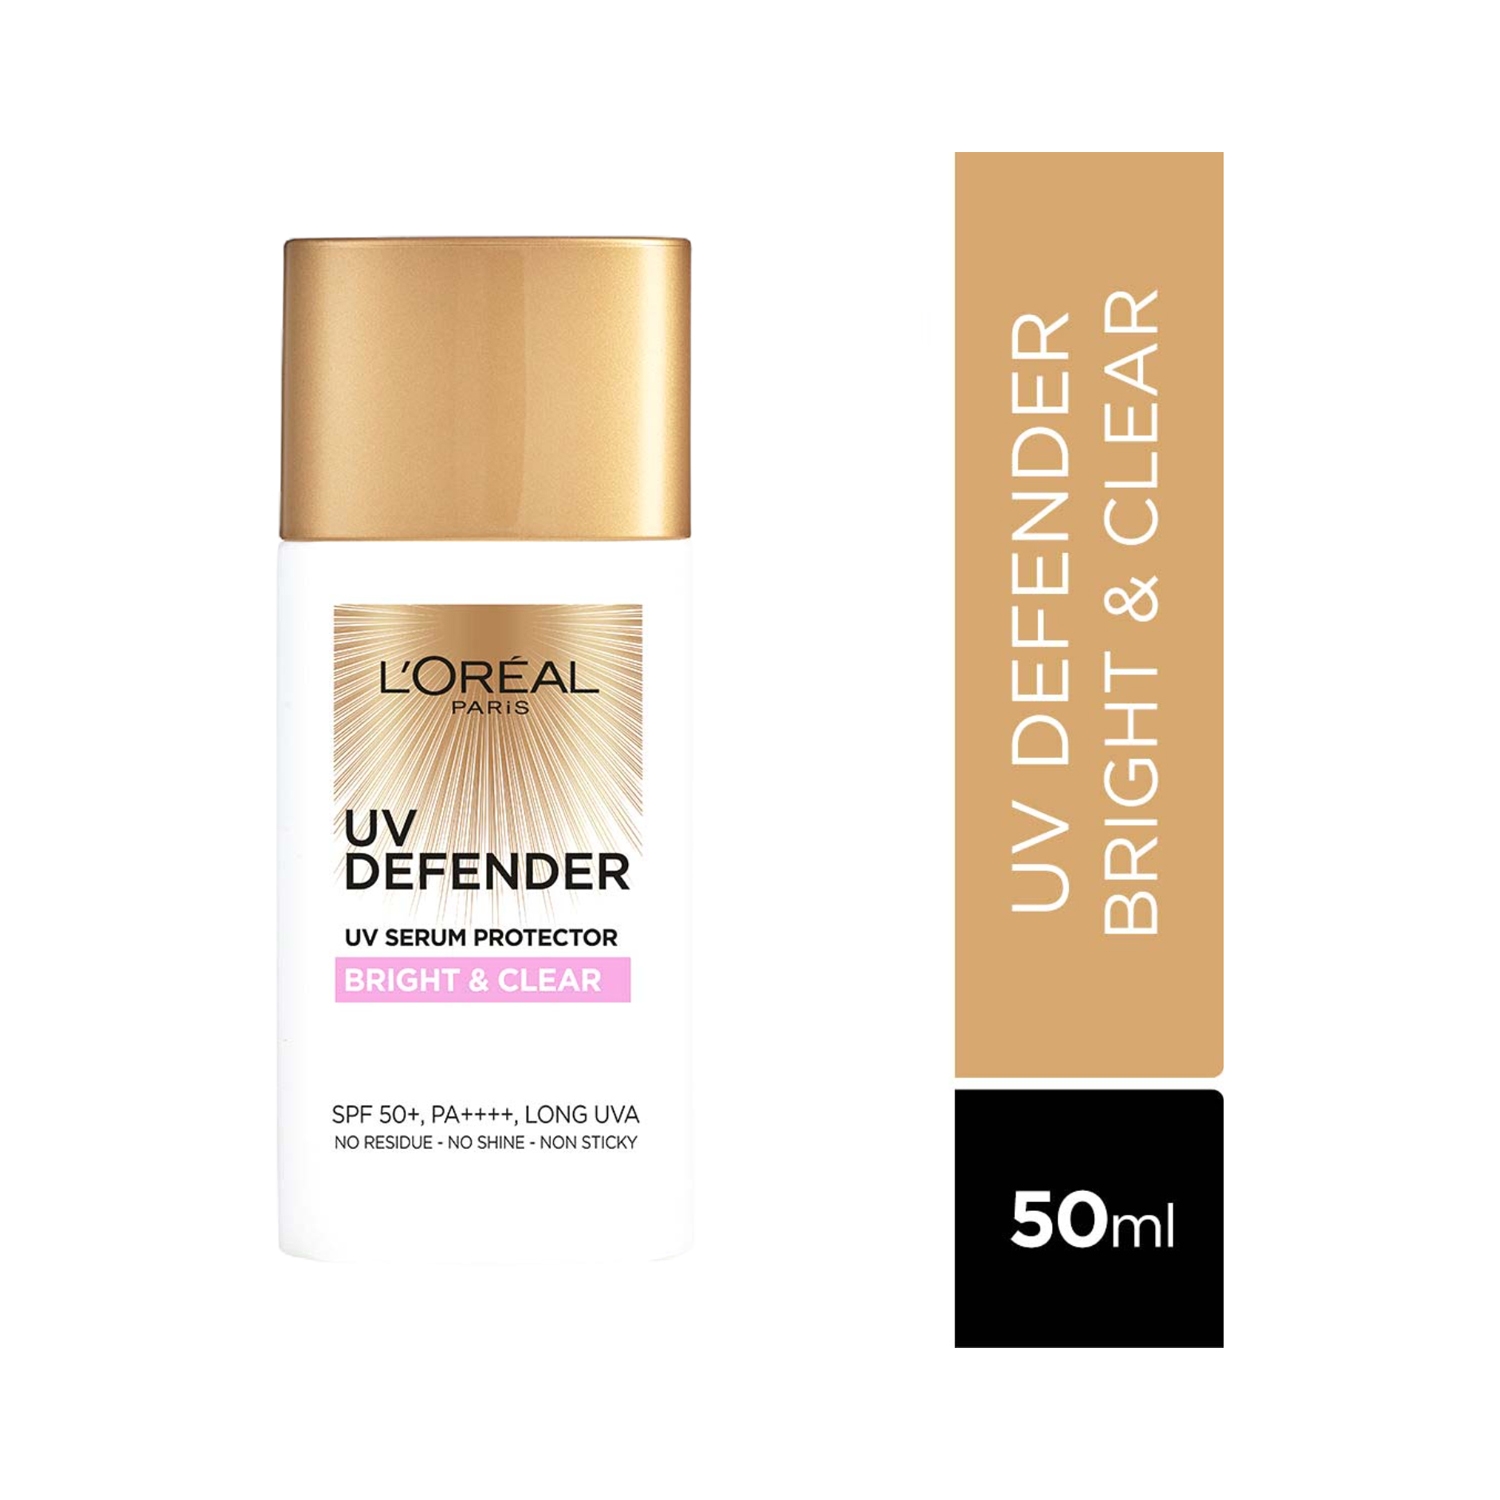 L'Oreal Paris | L'Oreal Paris UV Defender Serum Protector Sunscreen SPF 50 PA+++ - Bright & Clear (50ml)